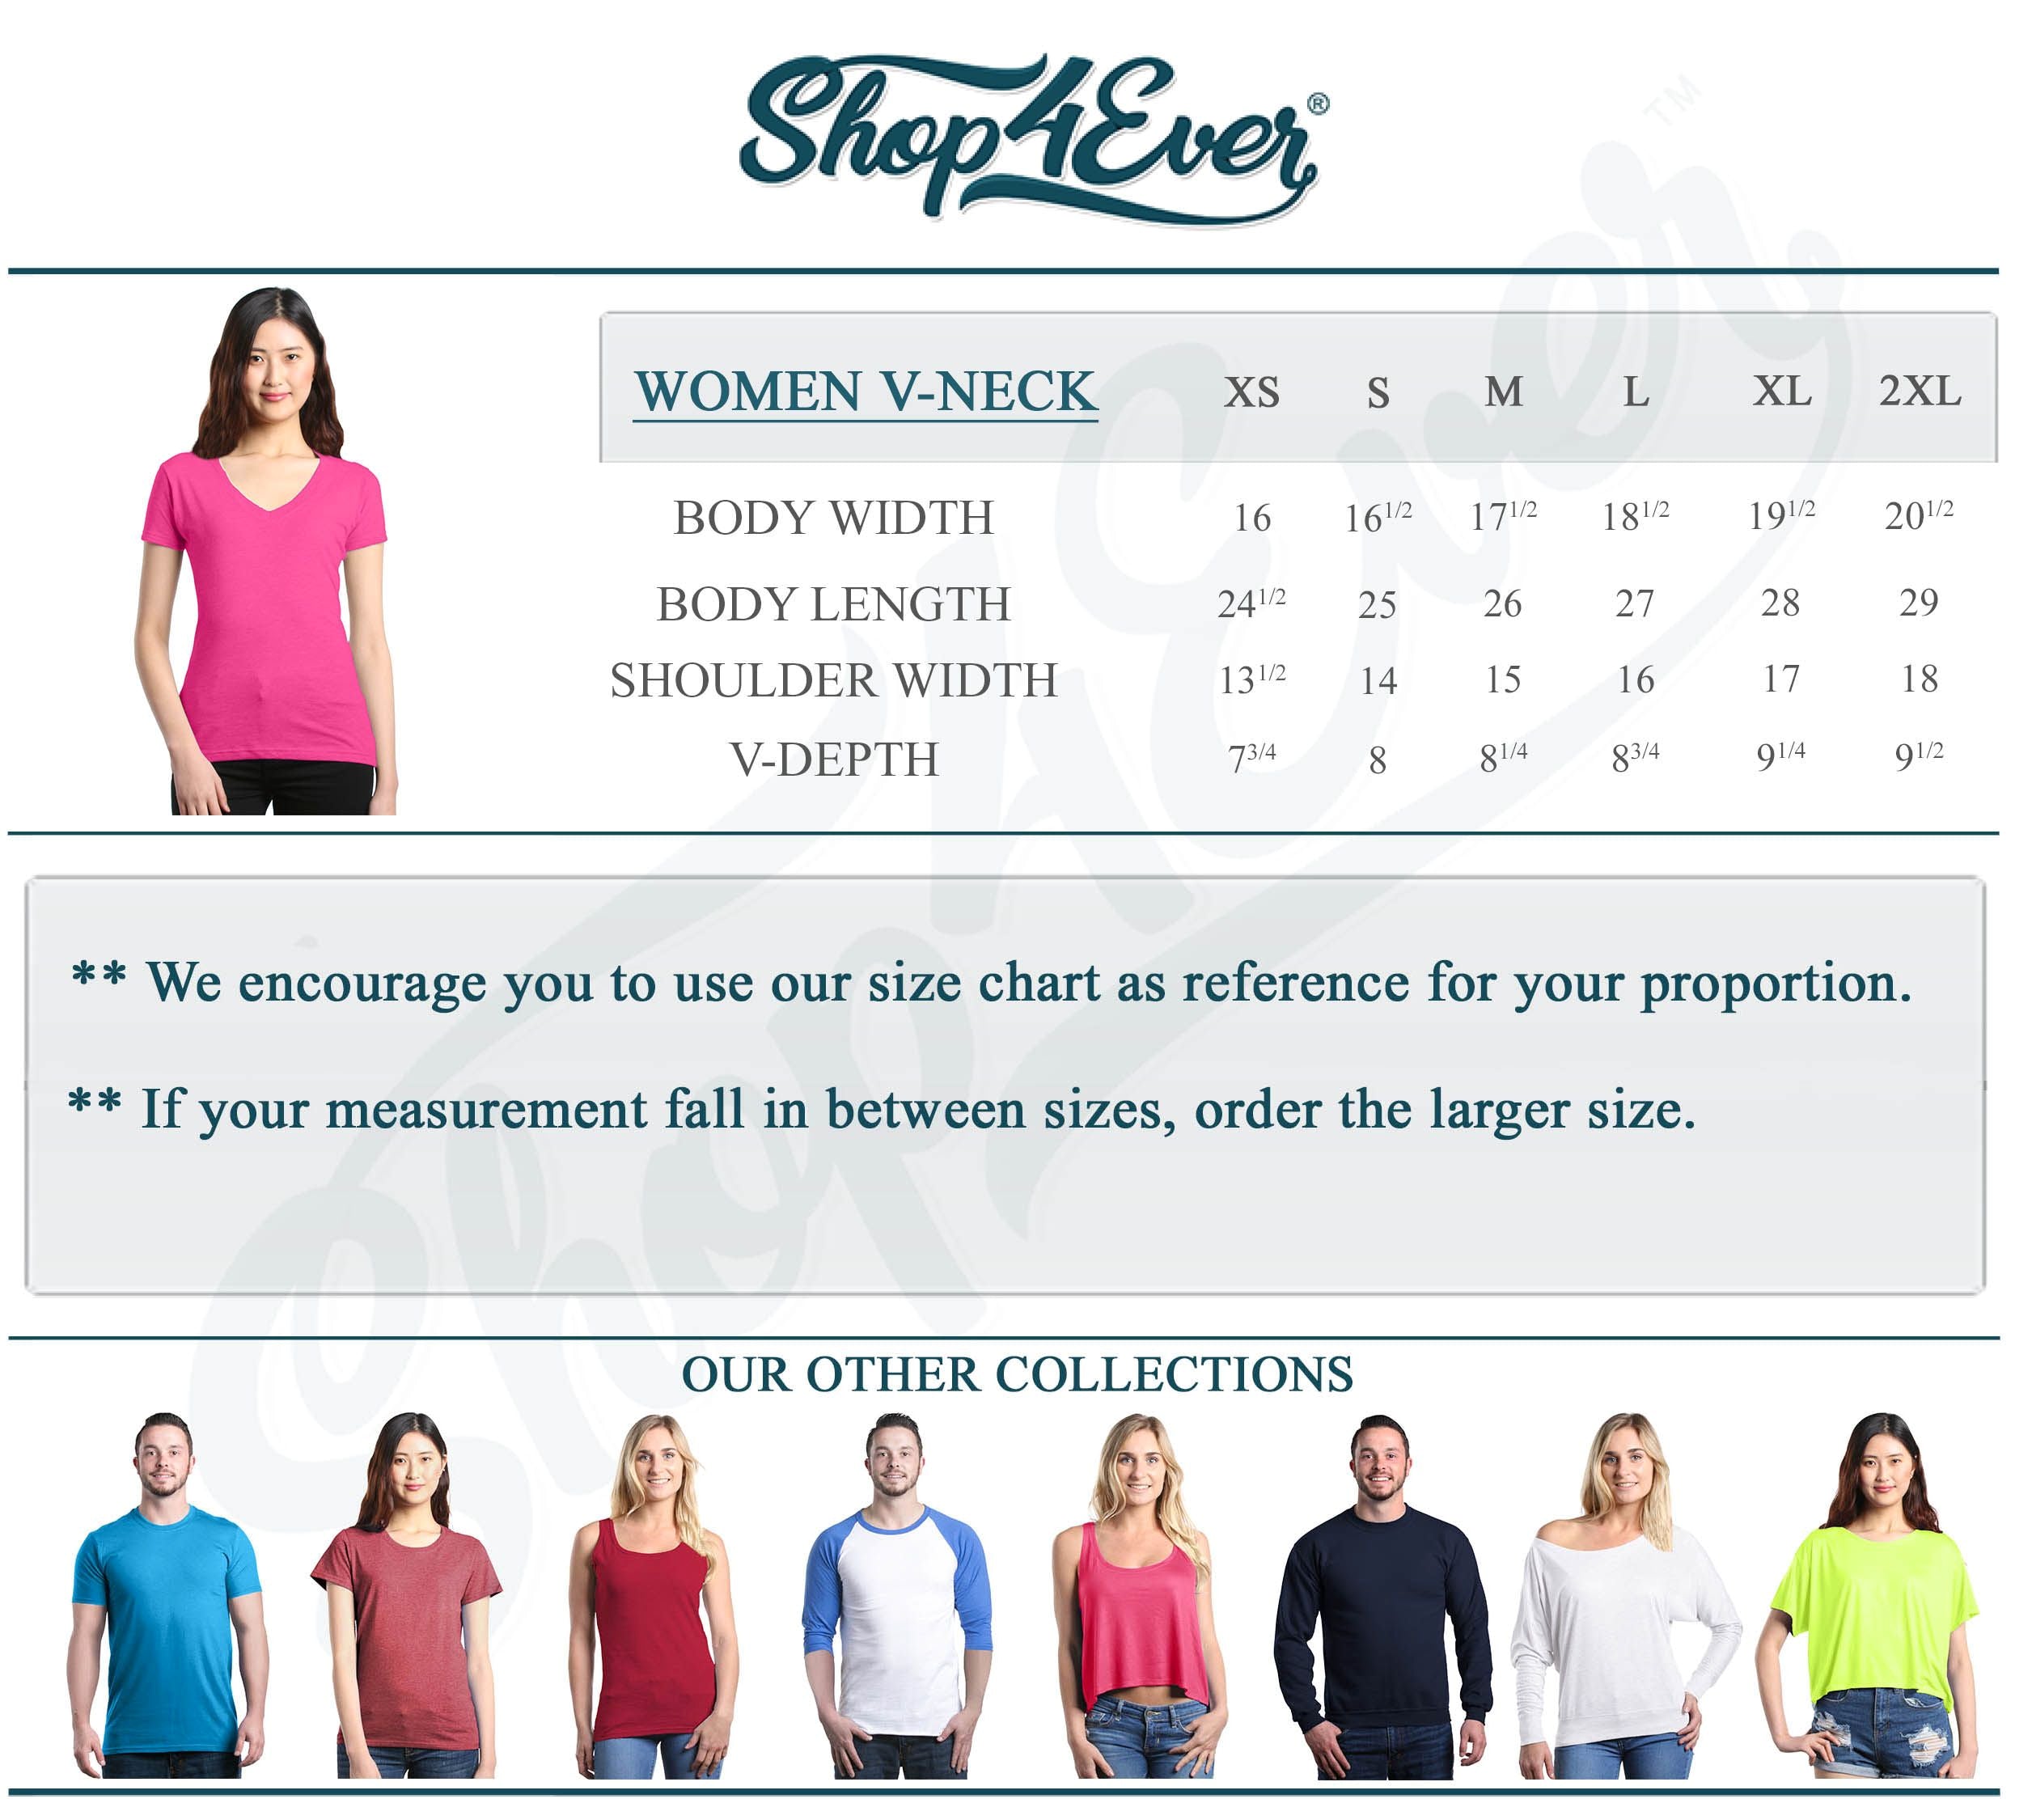 Dandelion Breast Cancer Awareness Women's V-Neck T-Shirt Slim Fit